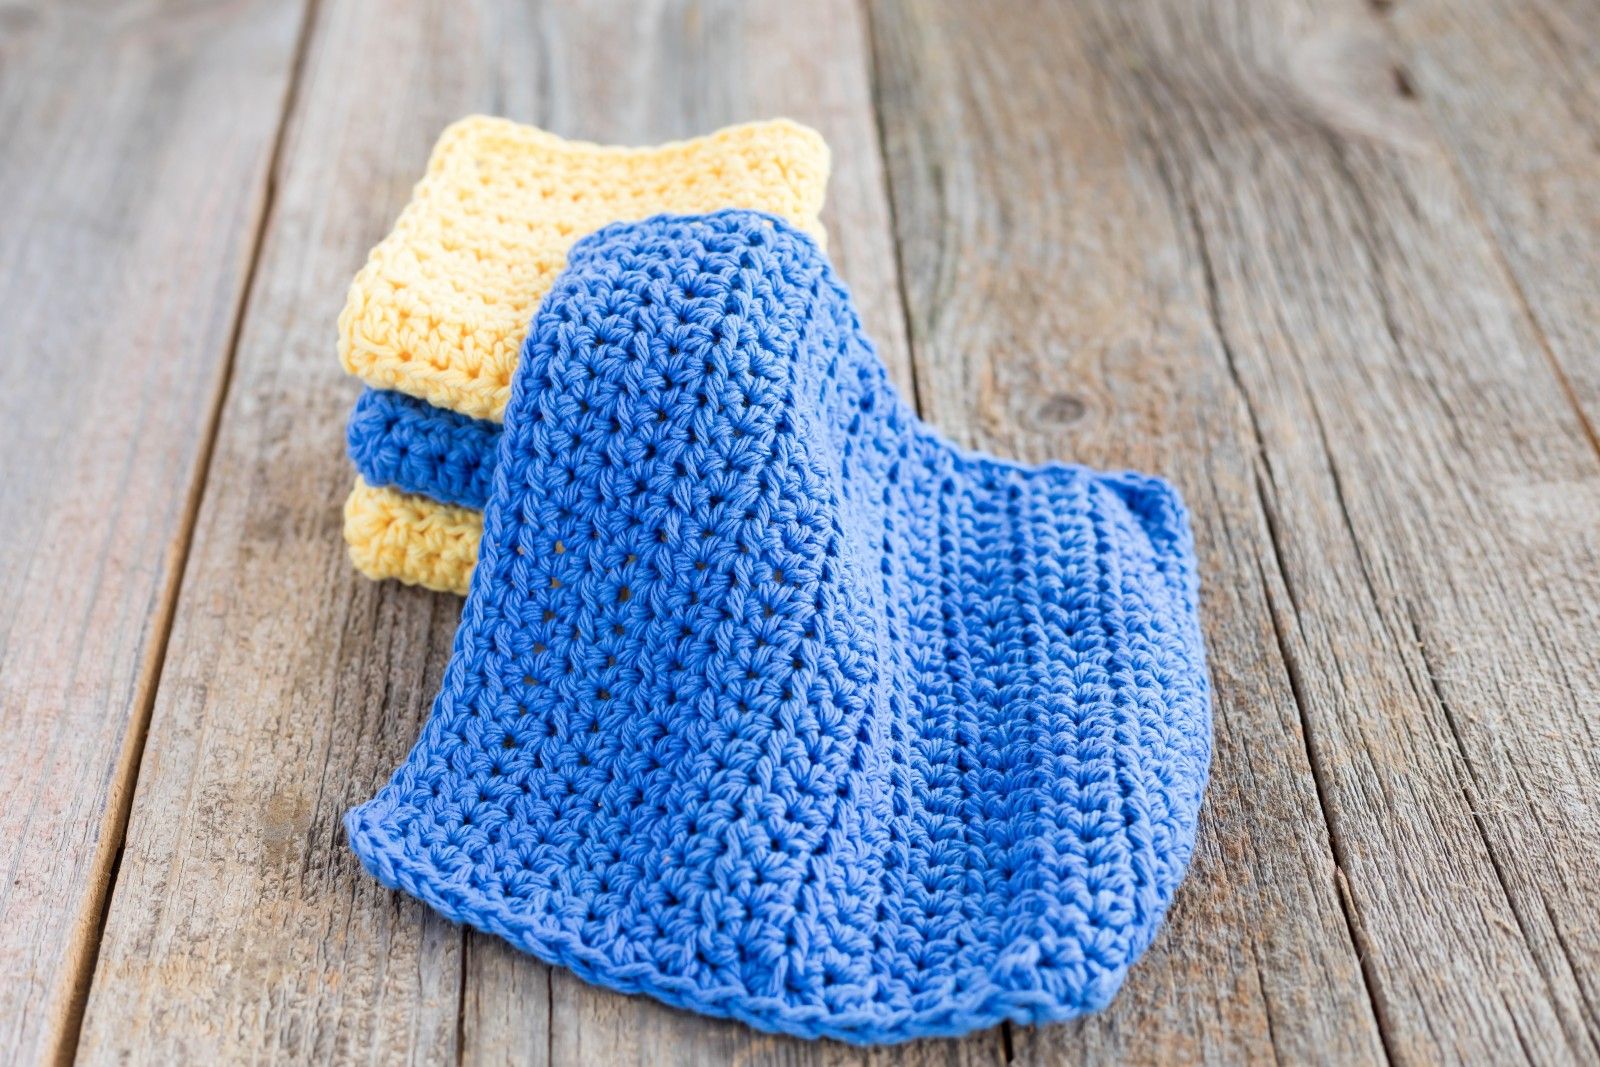 A Single Crochet Dishcloth Pattern for Beginners | Crochet dishcloth